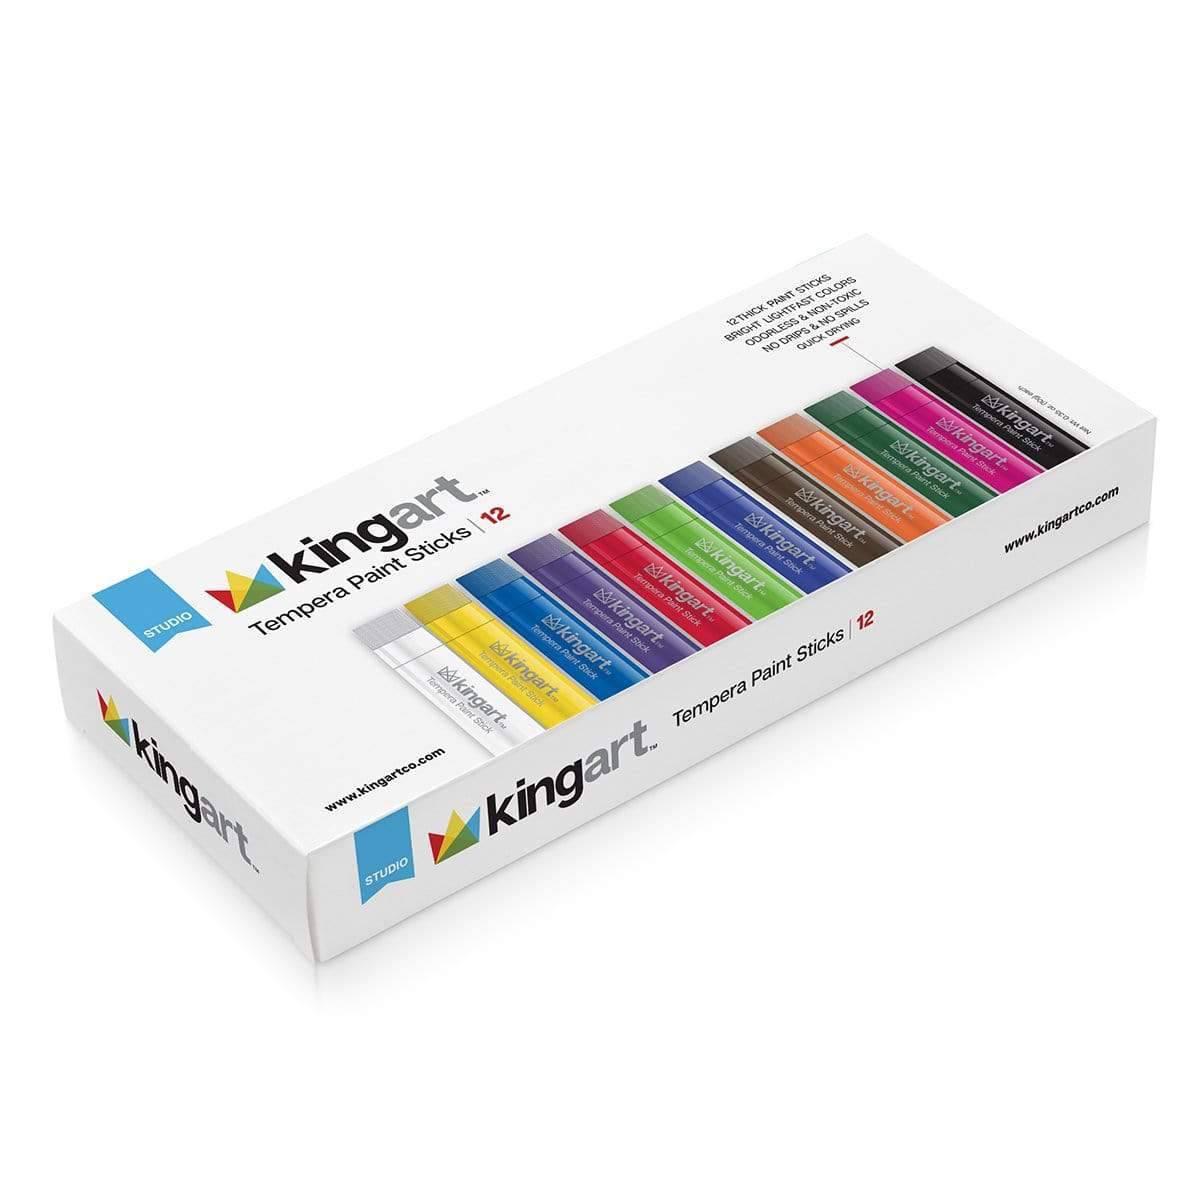 Crayola Quick Dry Paint Sticks,  Exclusive Colors, Paint Set for  Kids, 12 Count